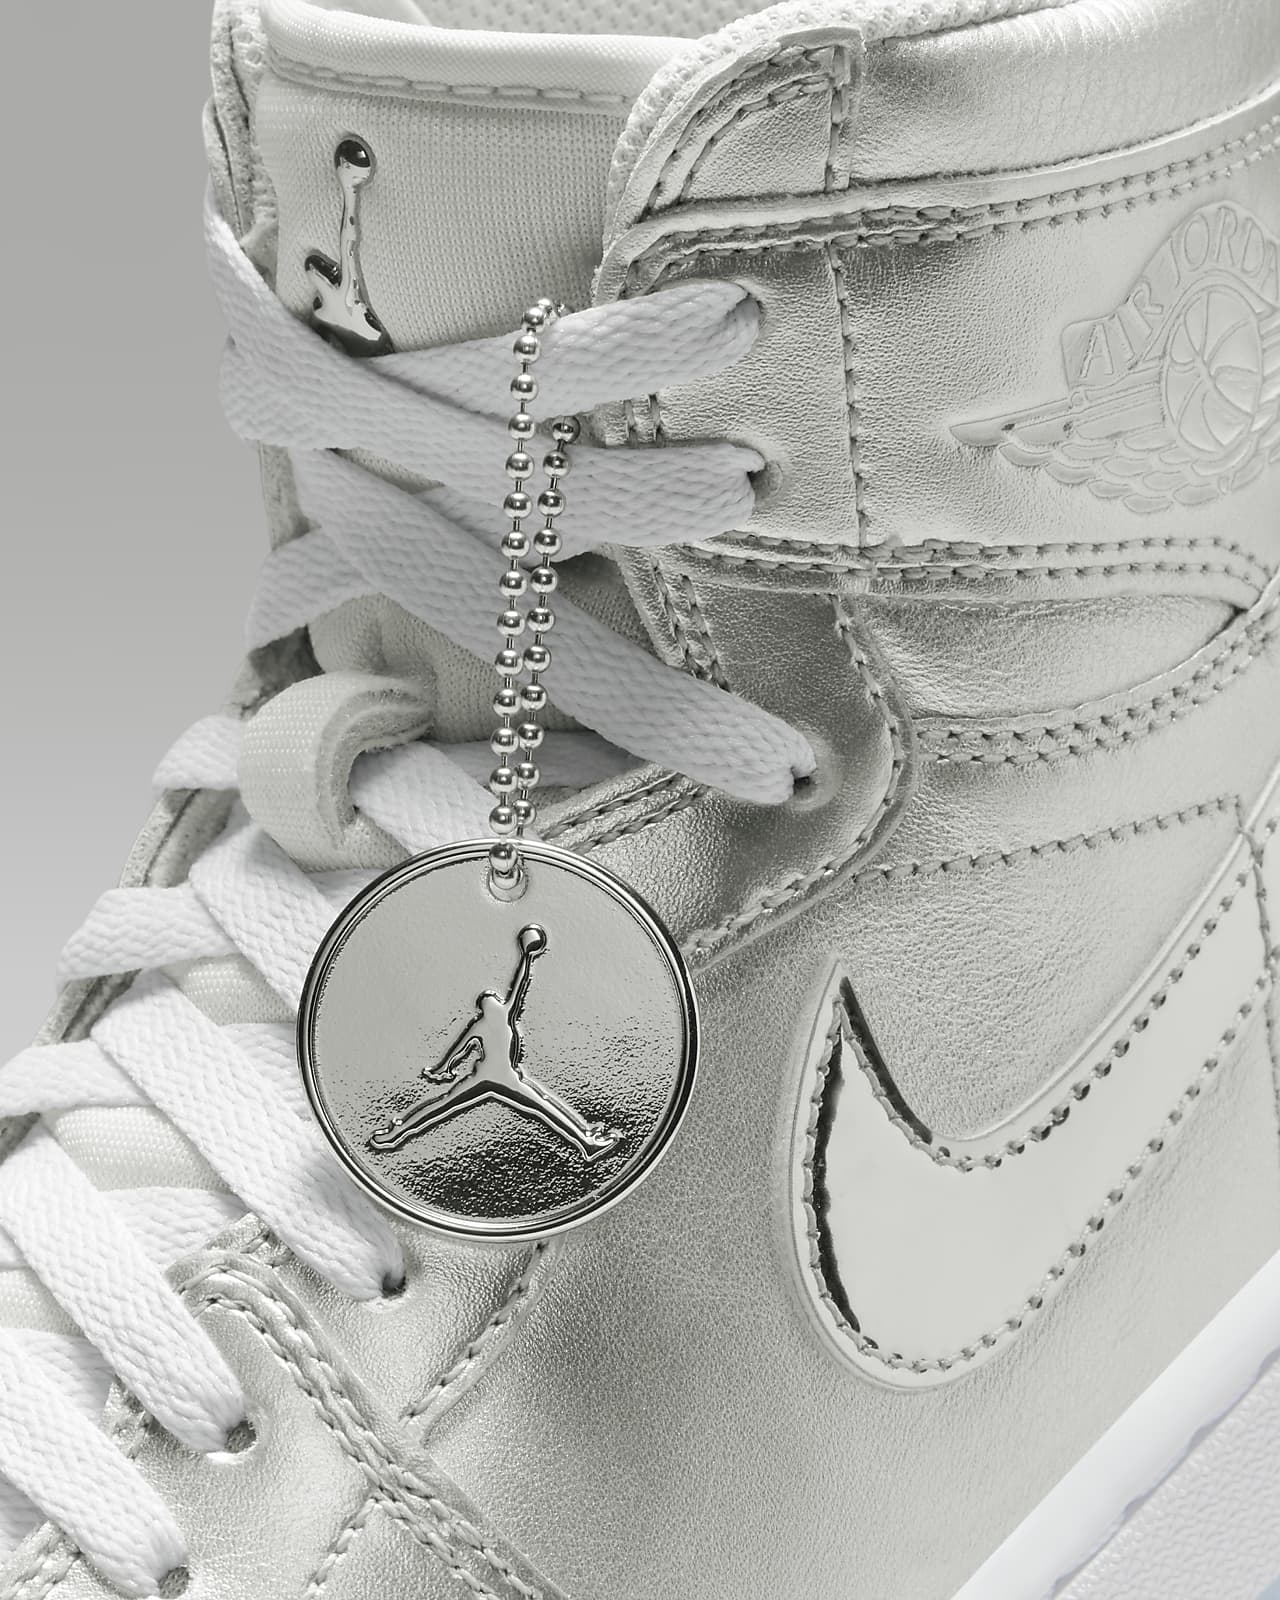 Air Jordan 1 High G NRG Men's Golf Shoes. Nike.com